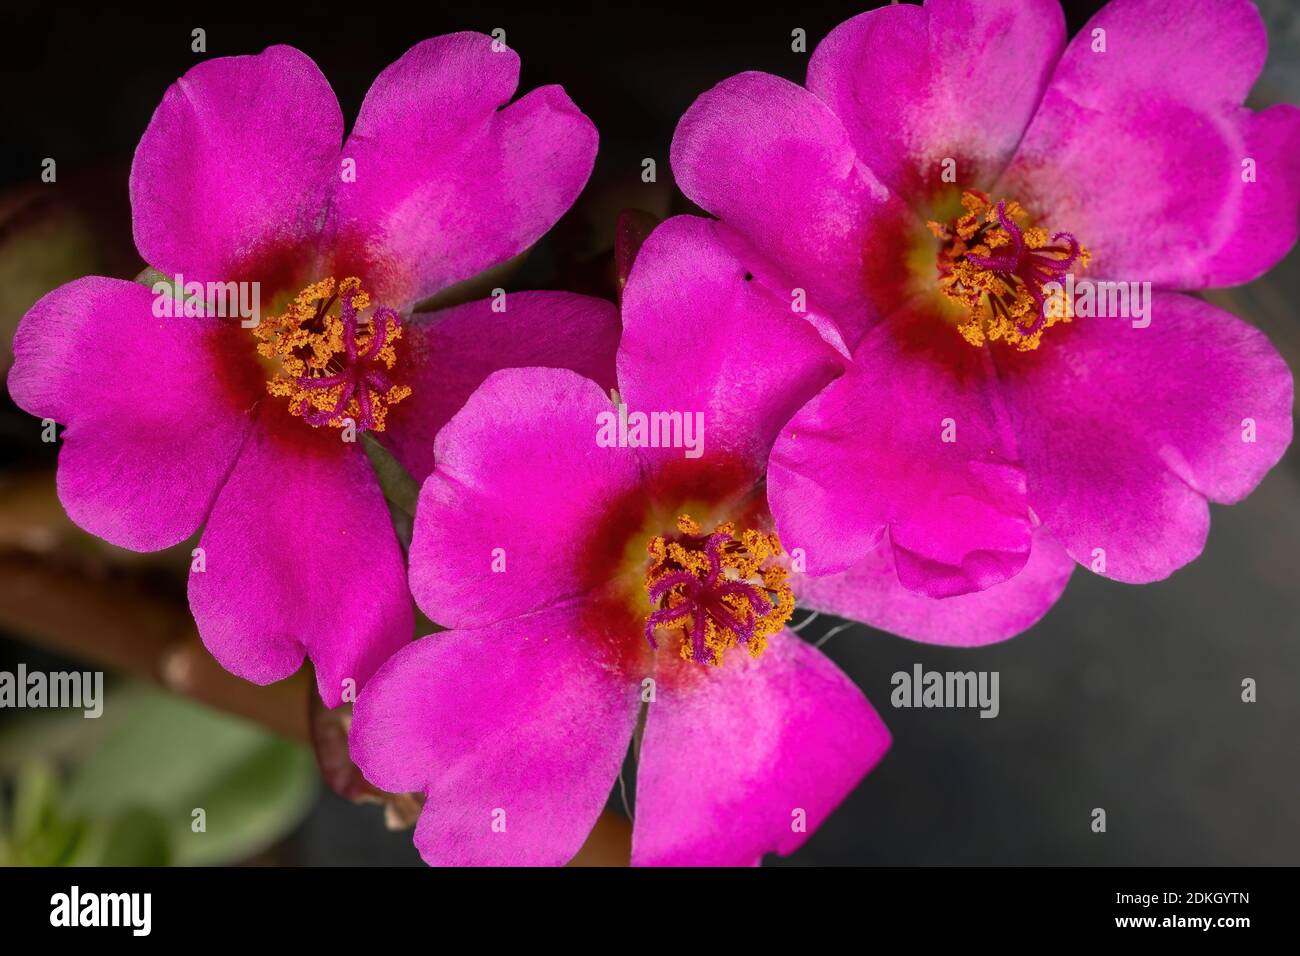 Paraguayan Purslane Flower of the species Portulaca amilis Stock Photo